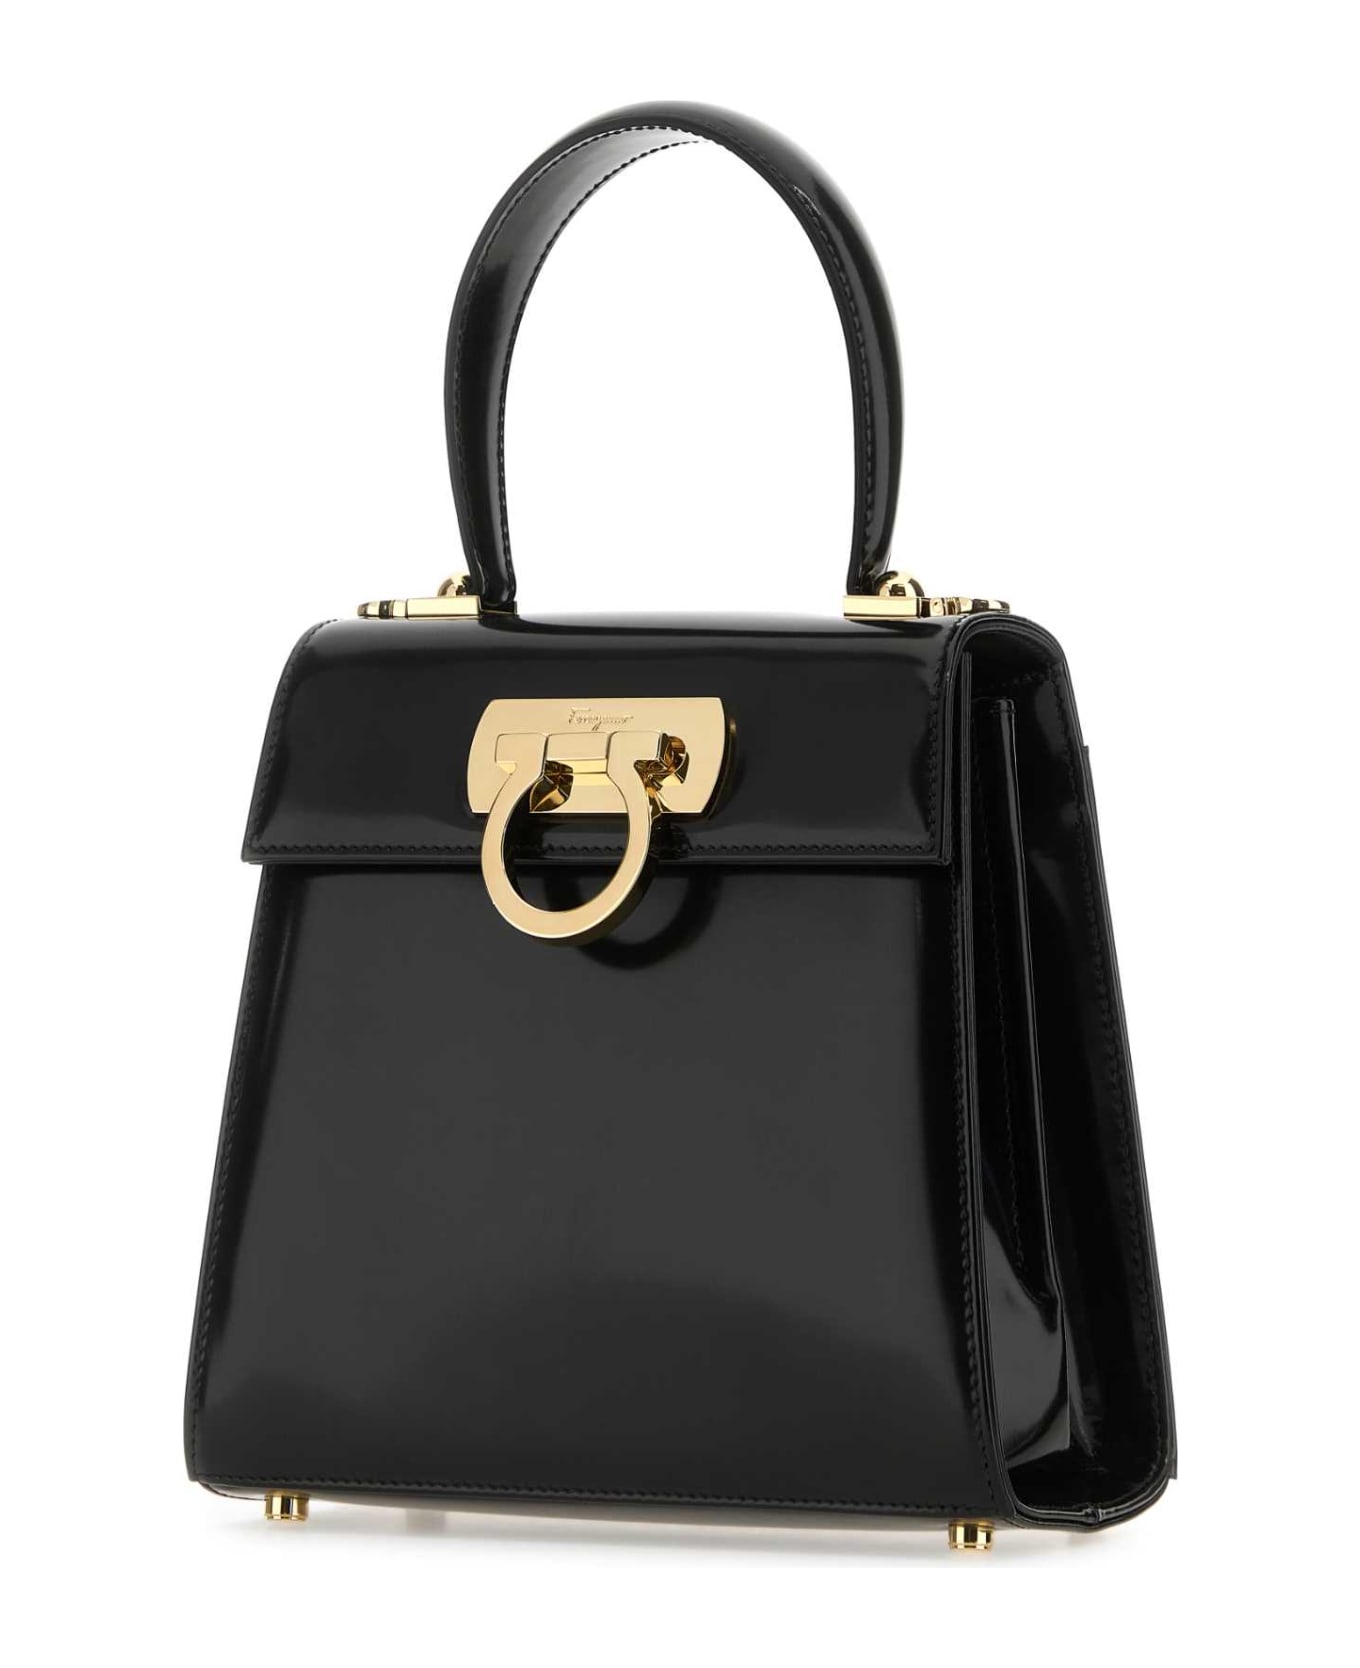 Ferragamo Black Leather Small Iconic Handbag - NERONERONERO